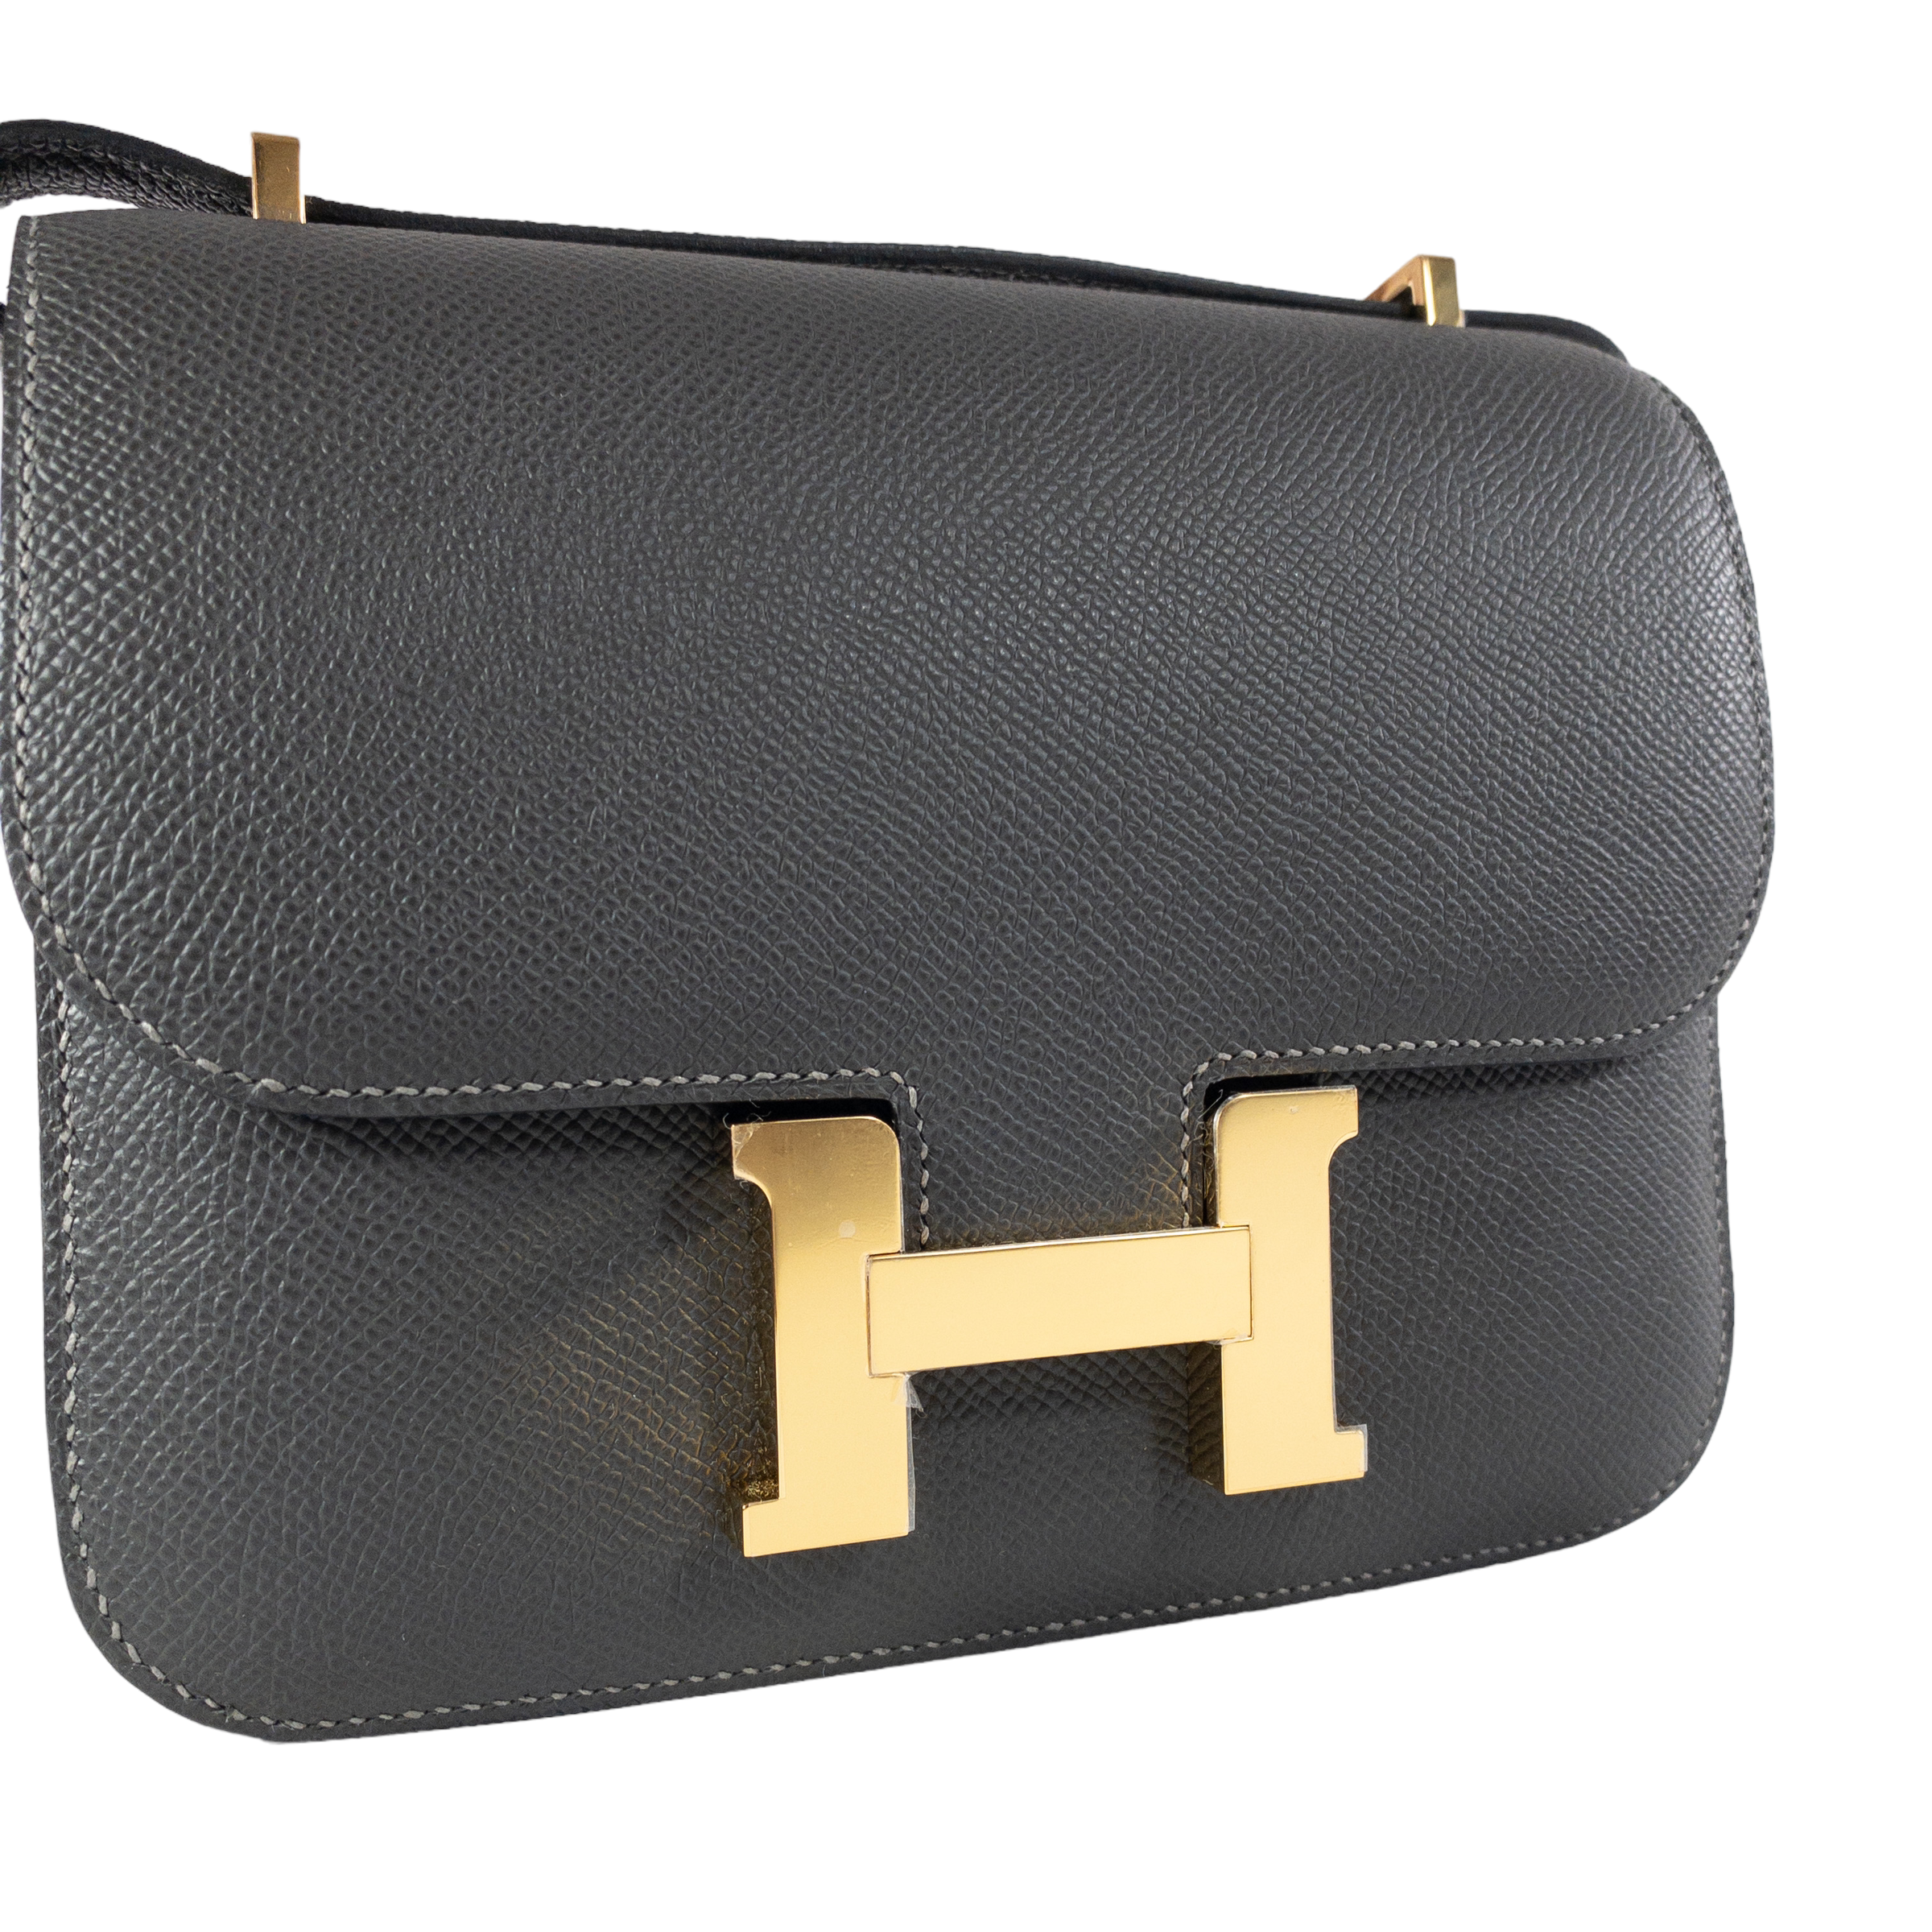 Hermes GHW Constance Handbag